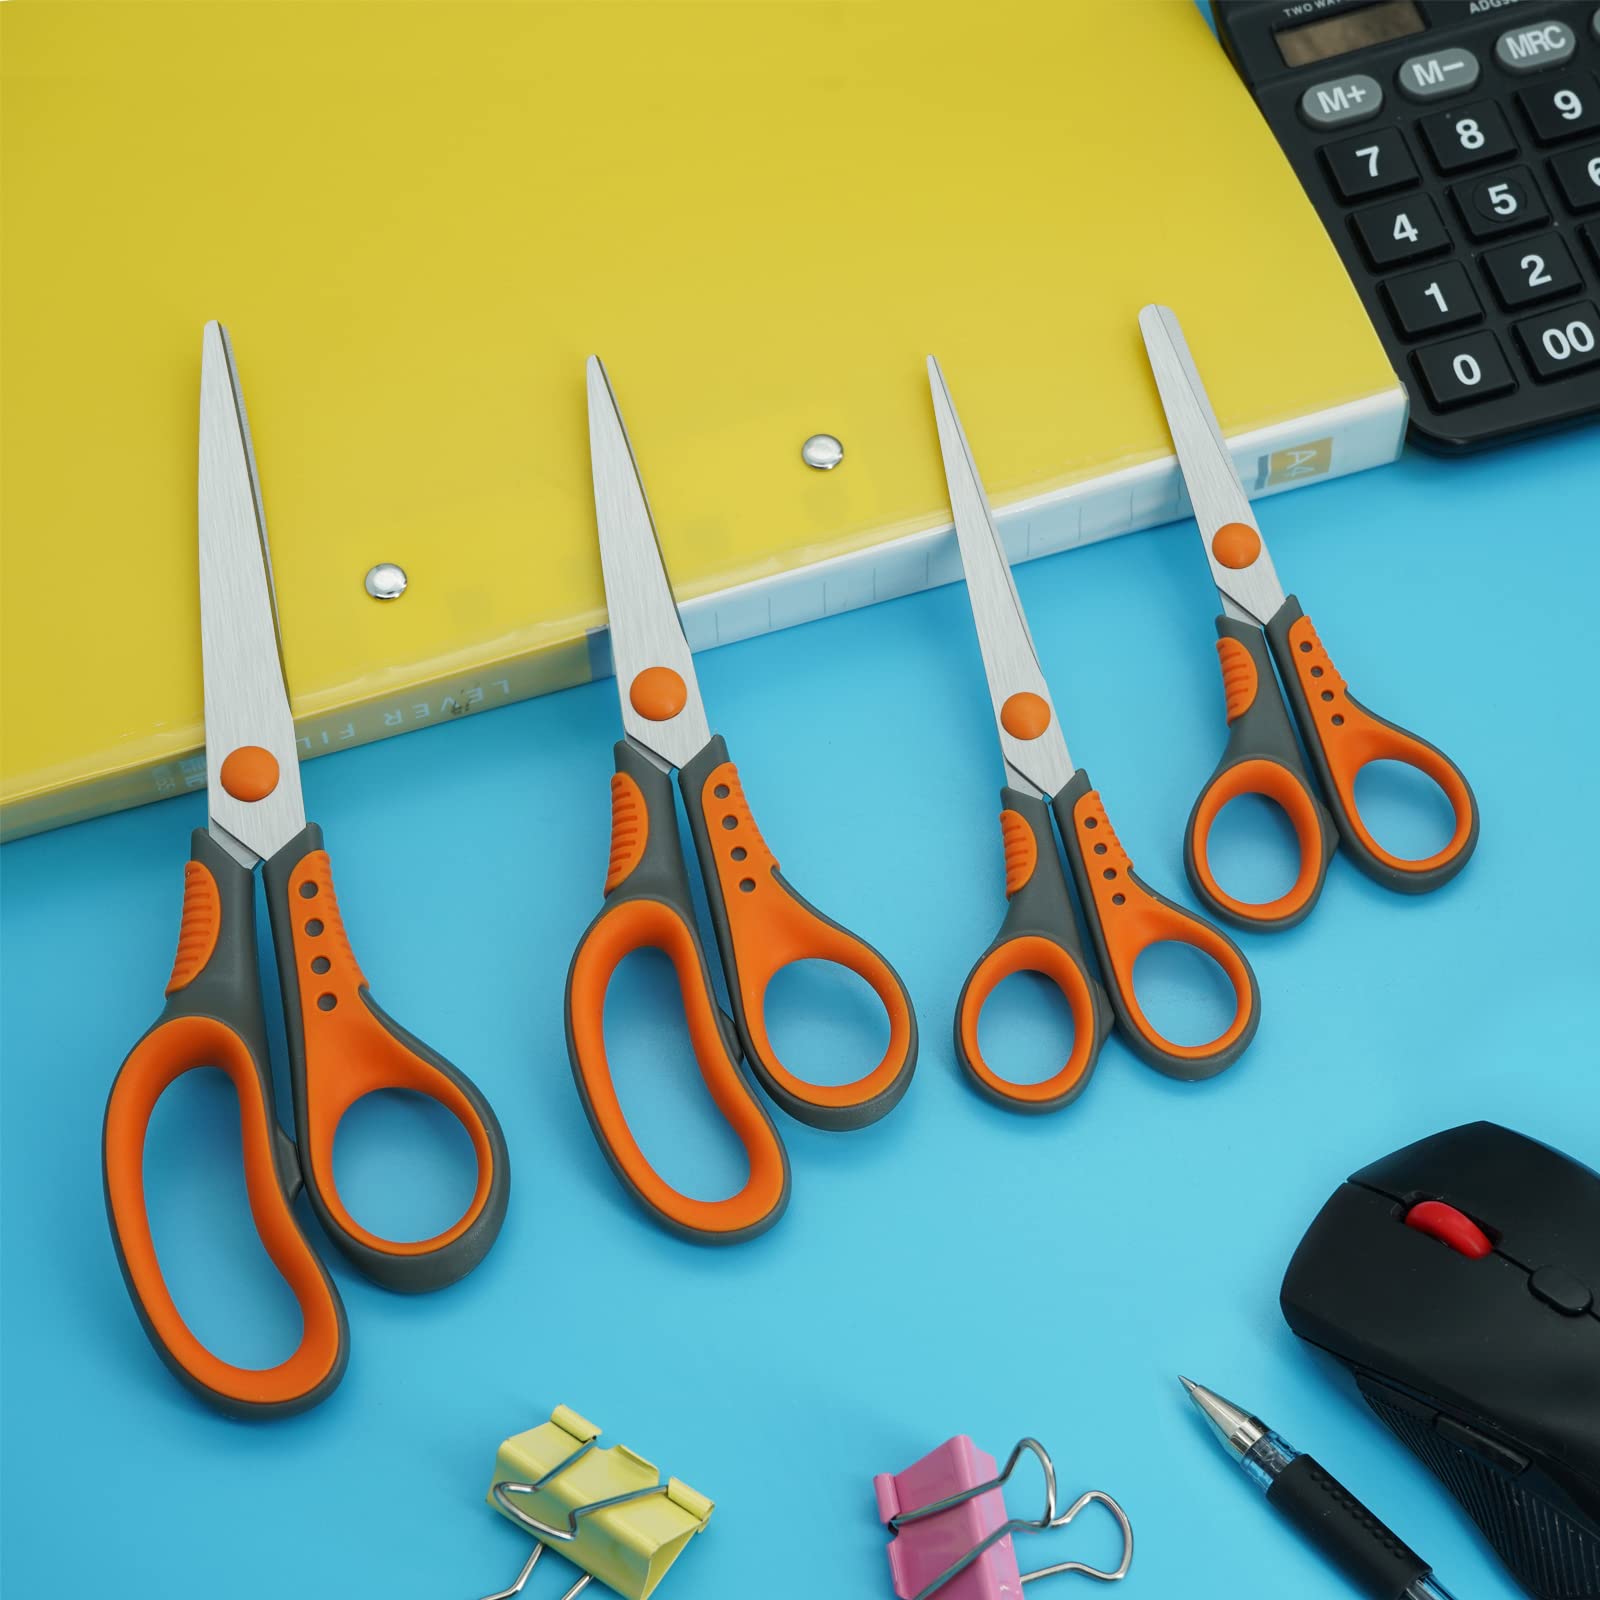 Oiijiok Scissors, Multi-Purpose Office Scissors, Comfortable Grip Household Scissors, Sturdy Sharp Craft Supplies in a Pack of 4 for Office, Home, School, Scissors for High School Teachers